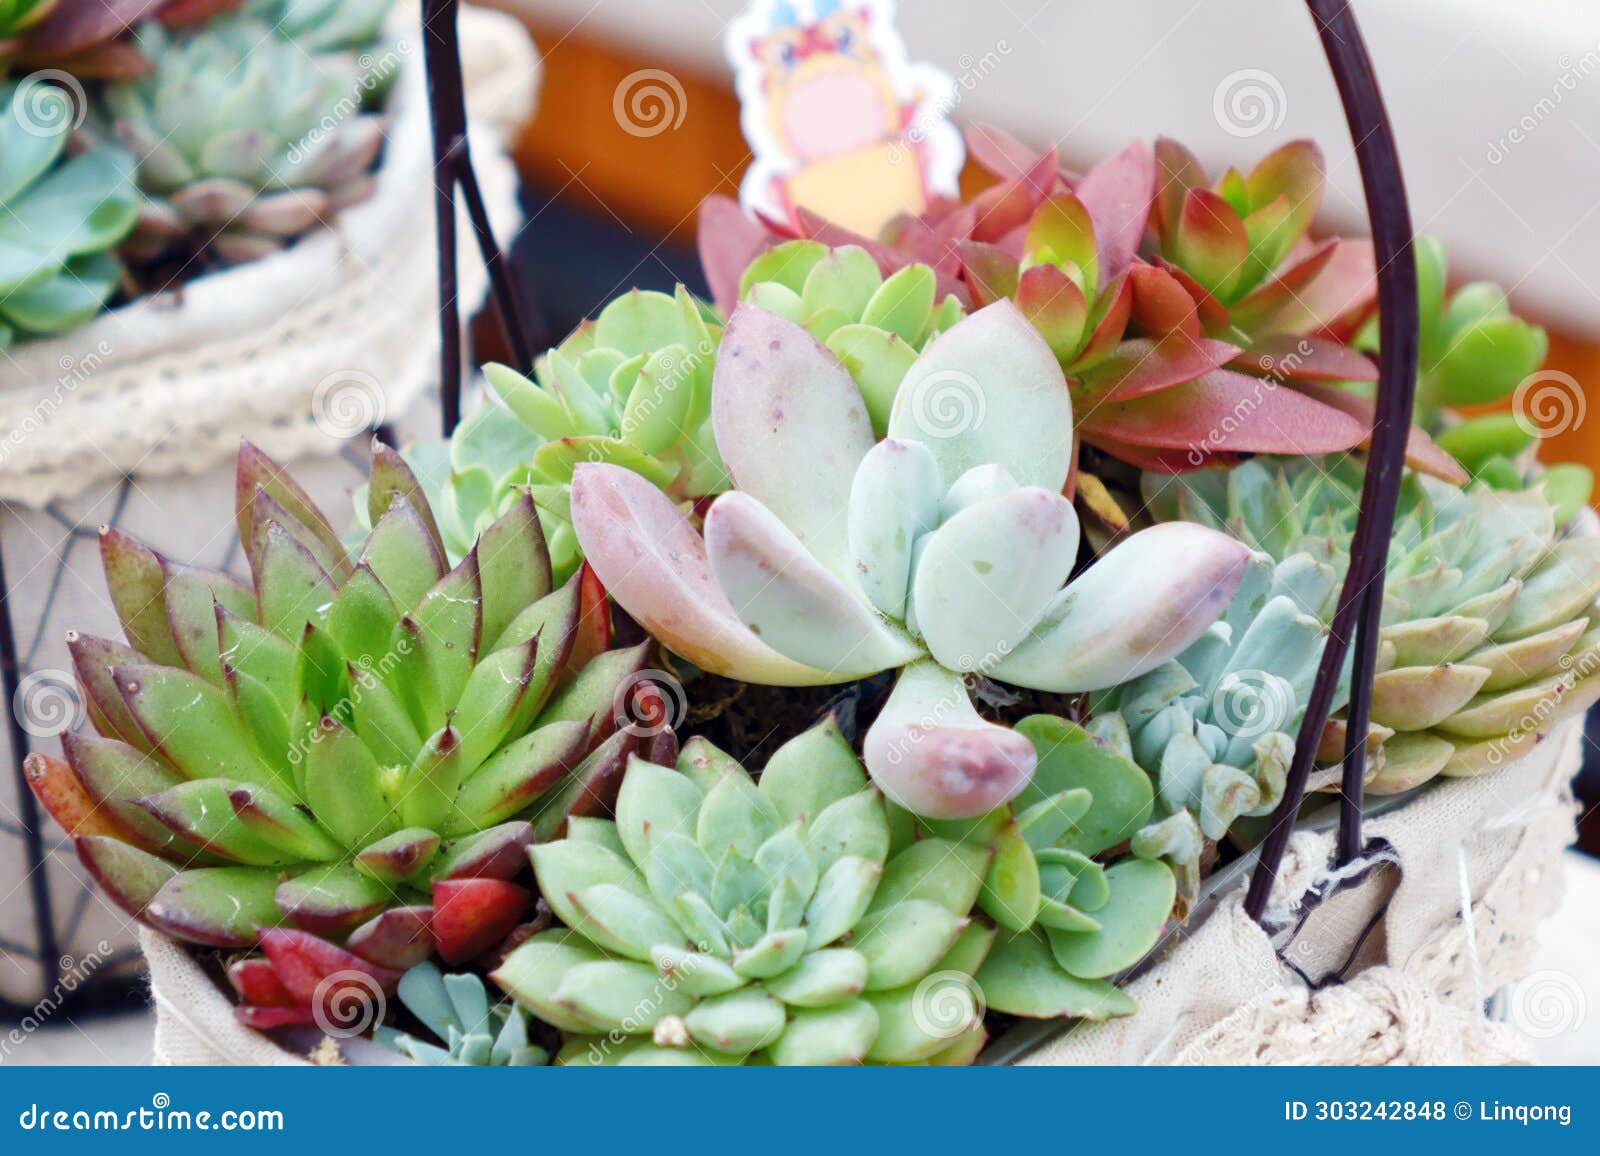 close up shot of cute succulent plants in basket.